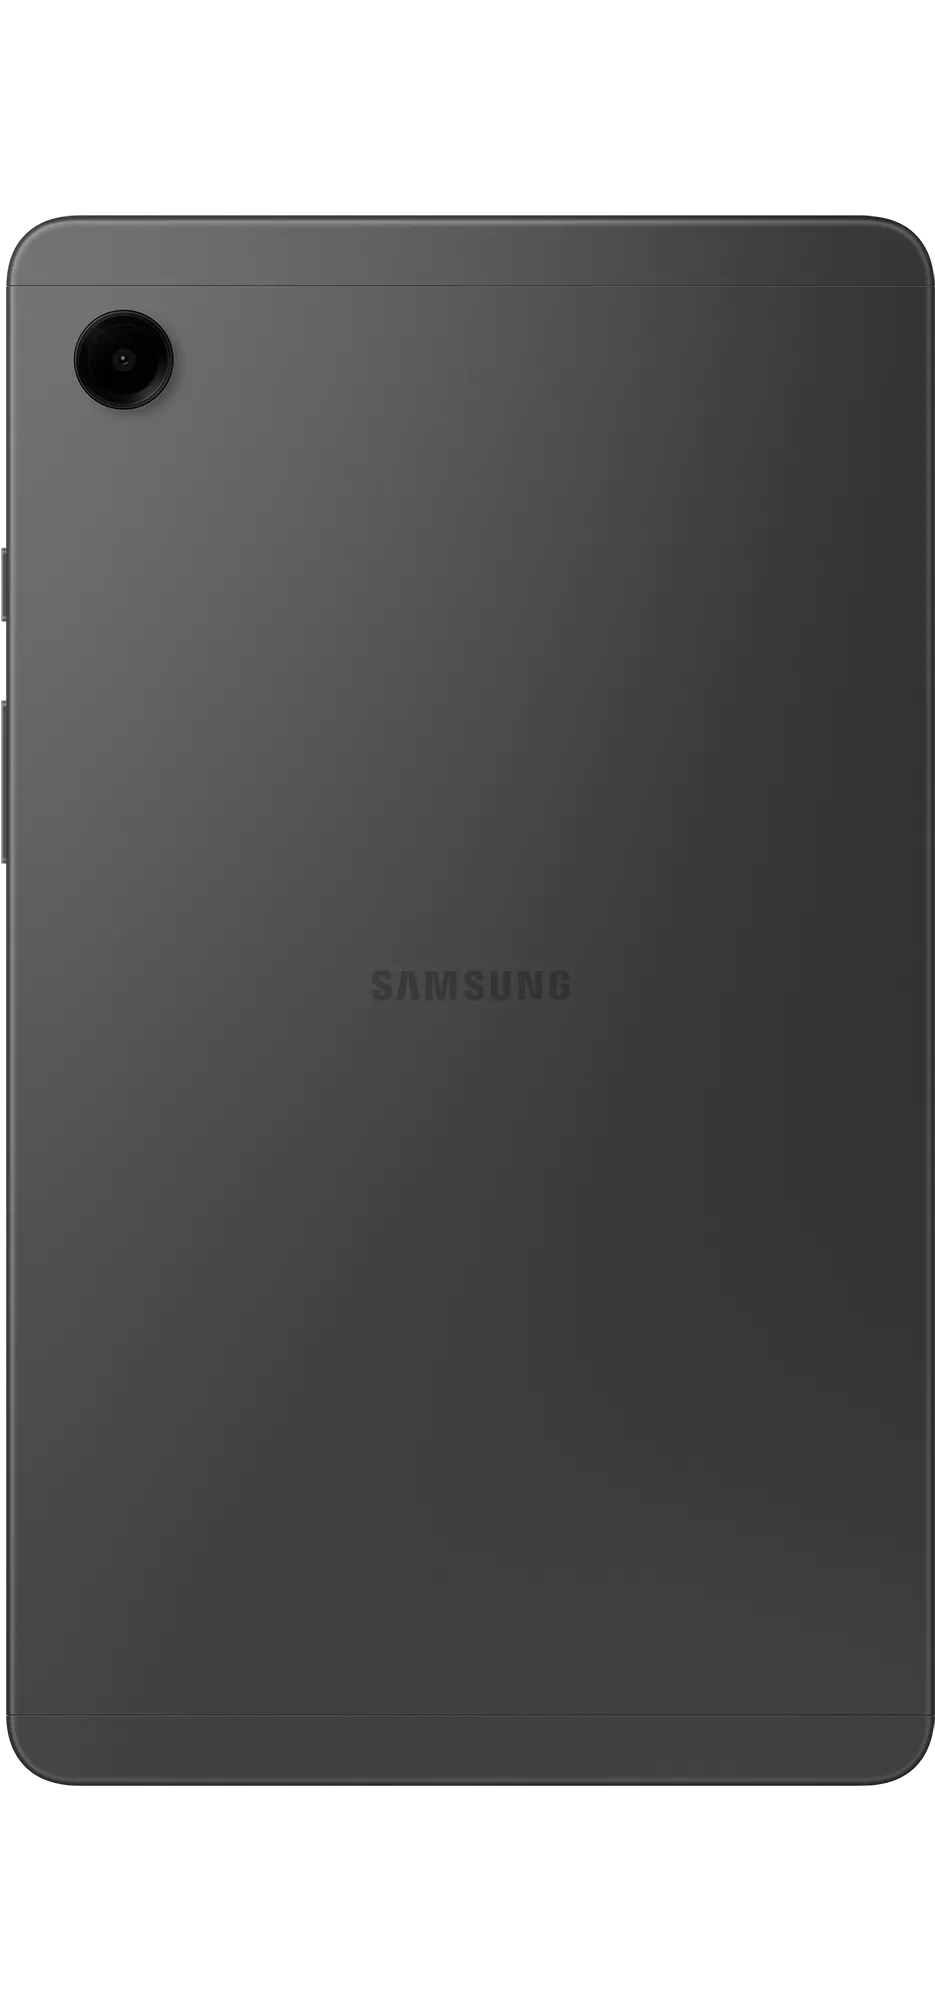 Samsung Galaxy Tab A9 Wi-Fi Graphite 64GB specs